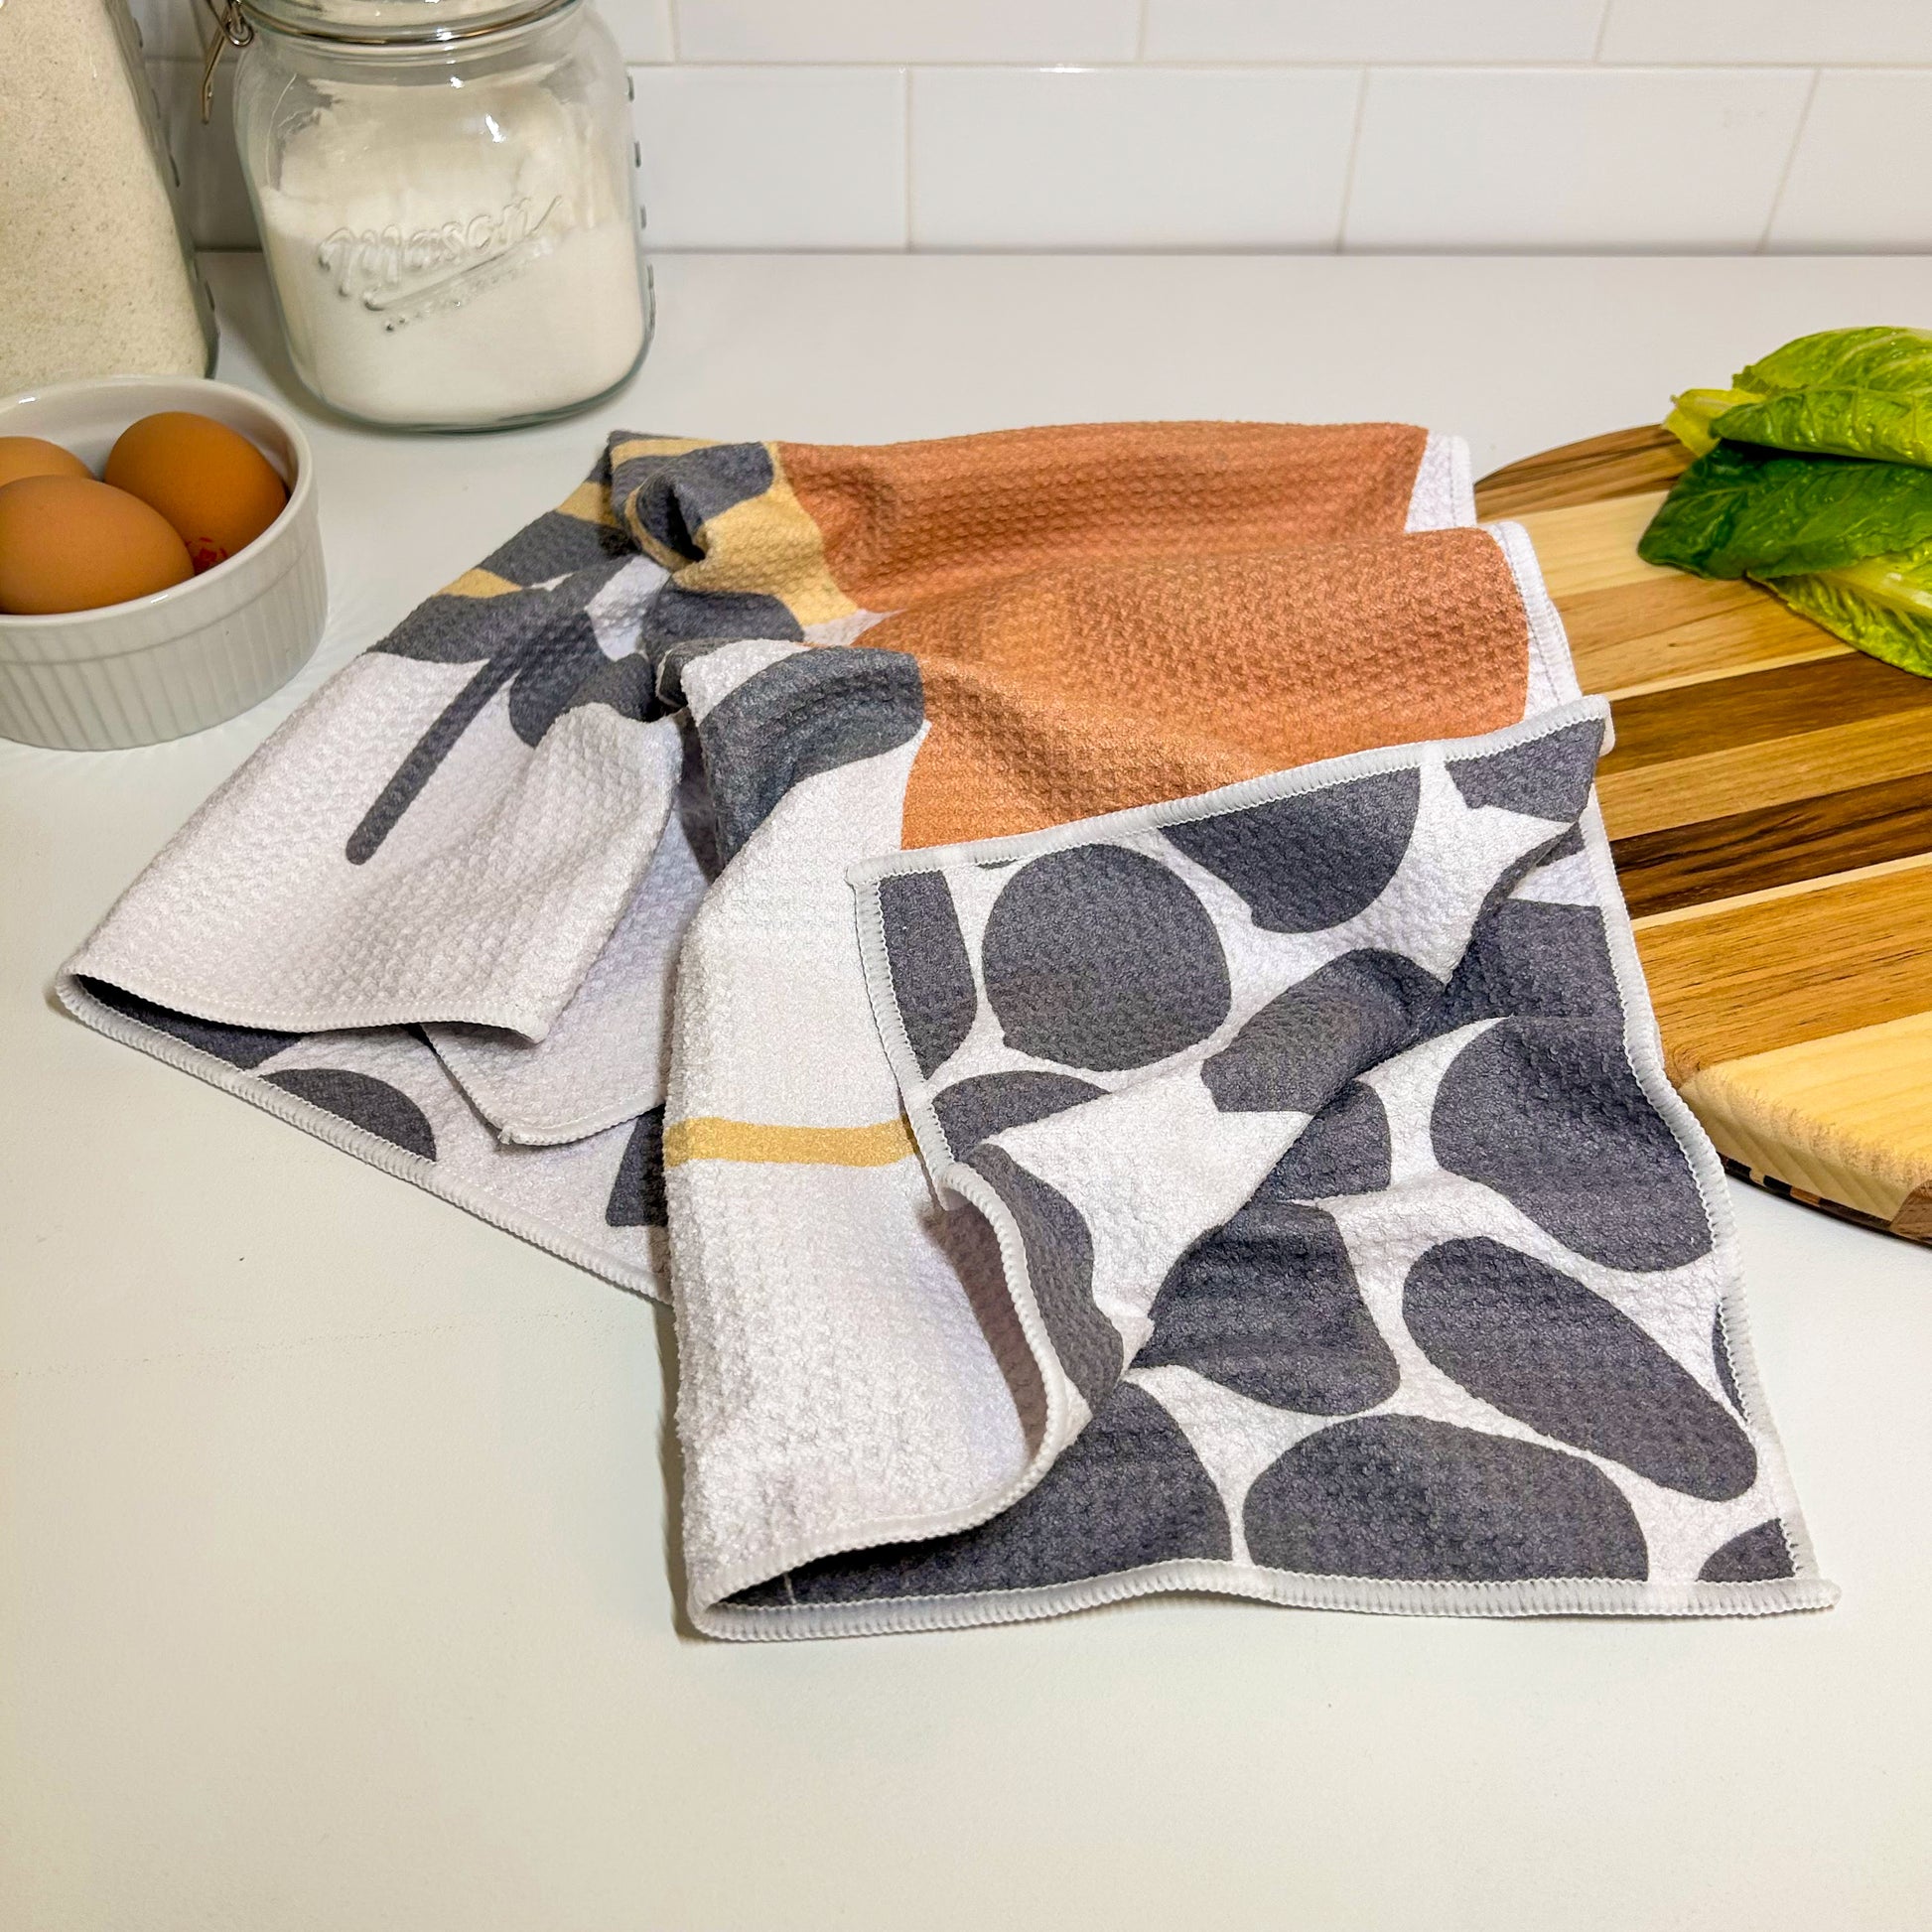 Wall Decor - Kitchen Dish Towel & Hand towel